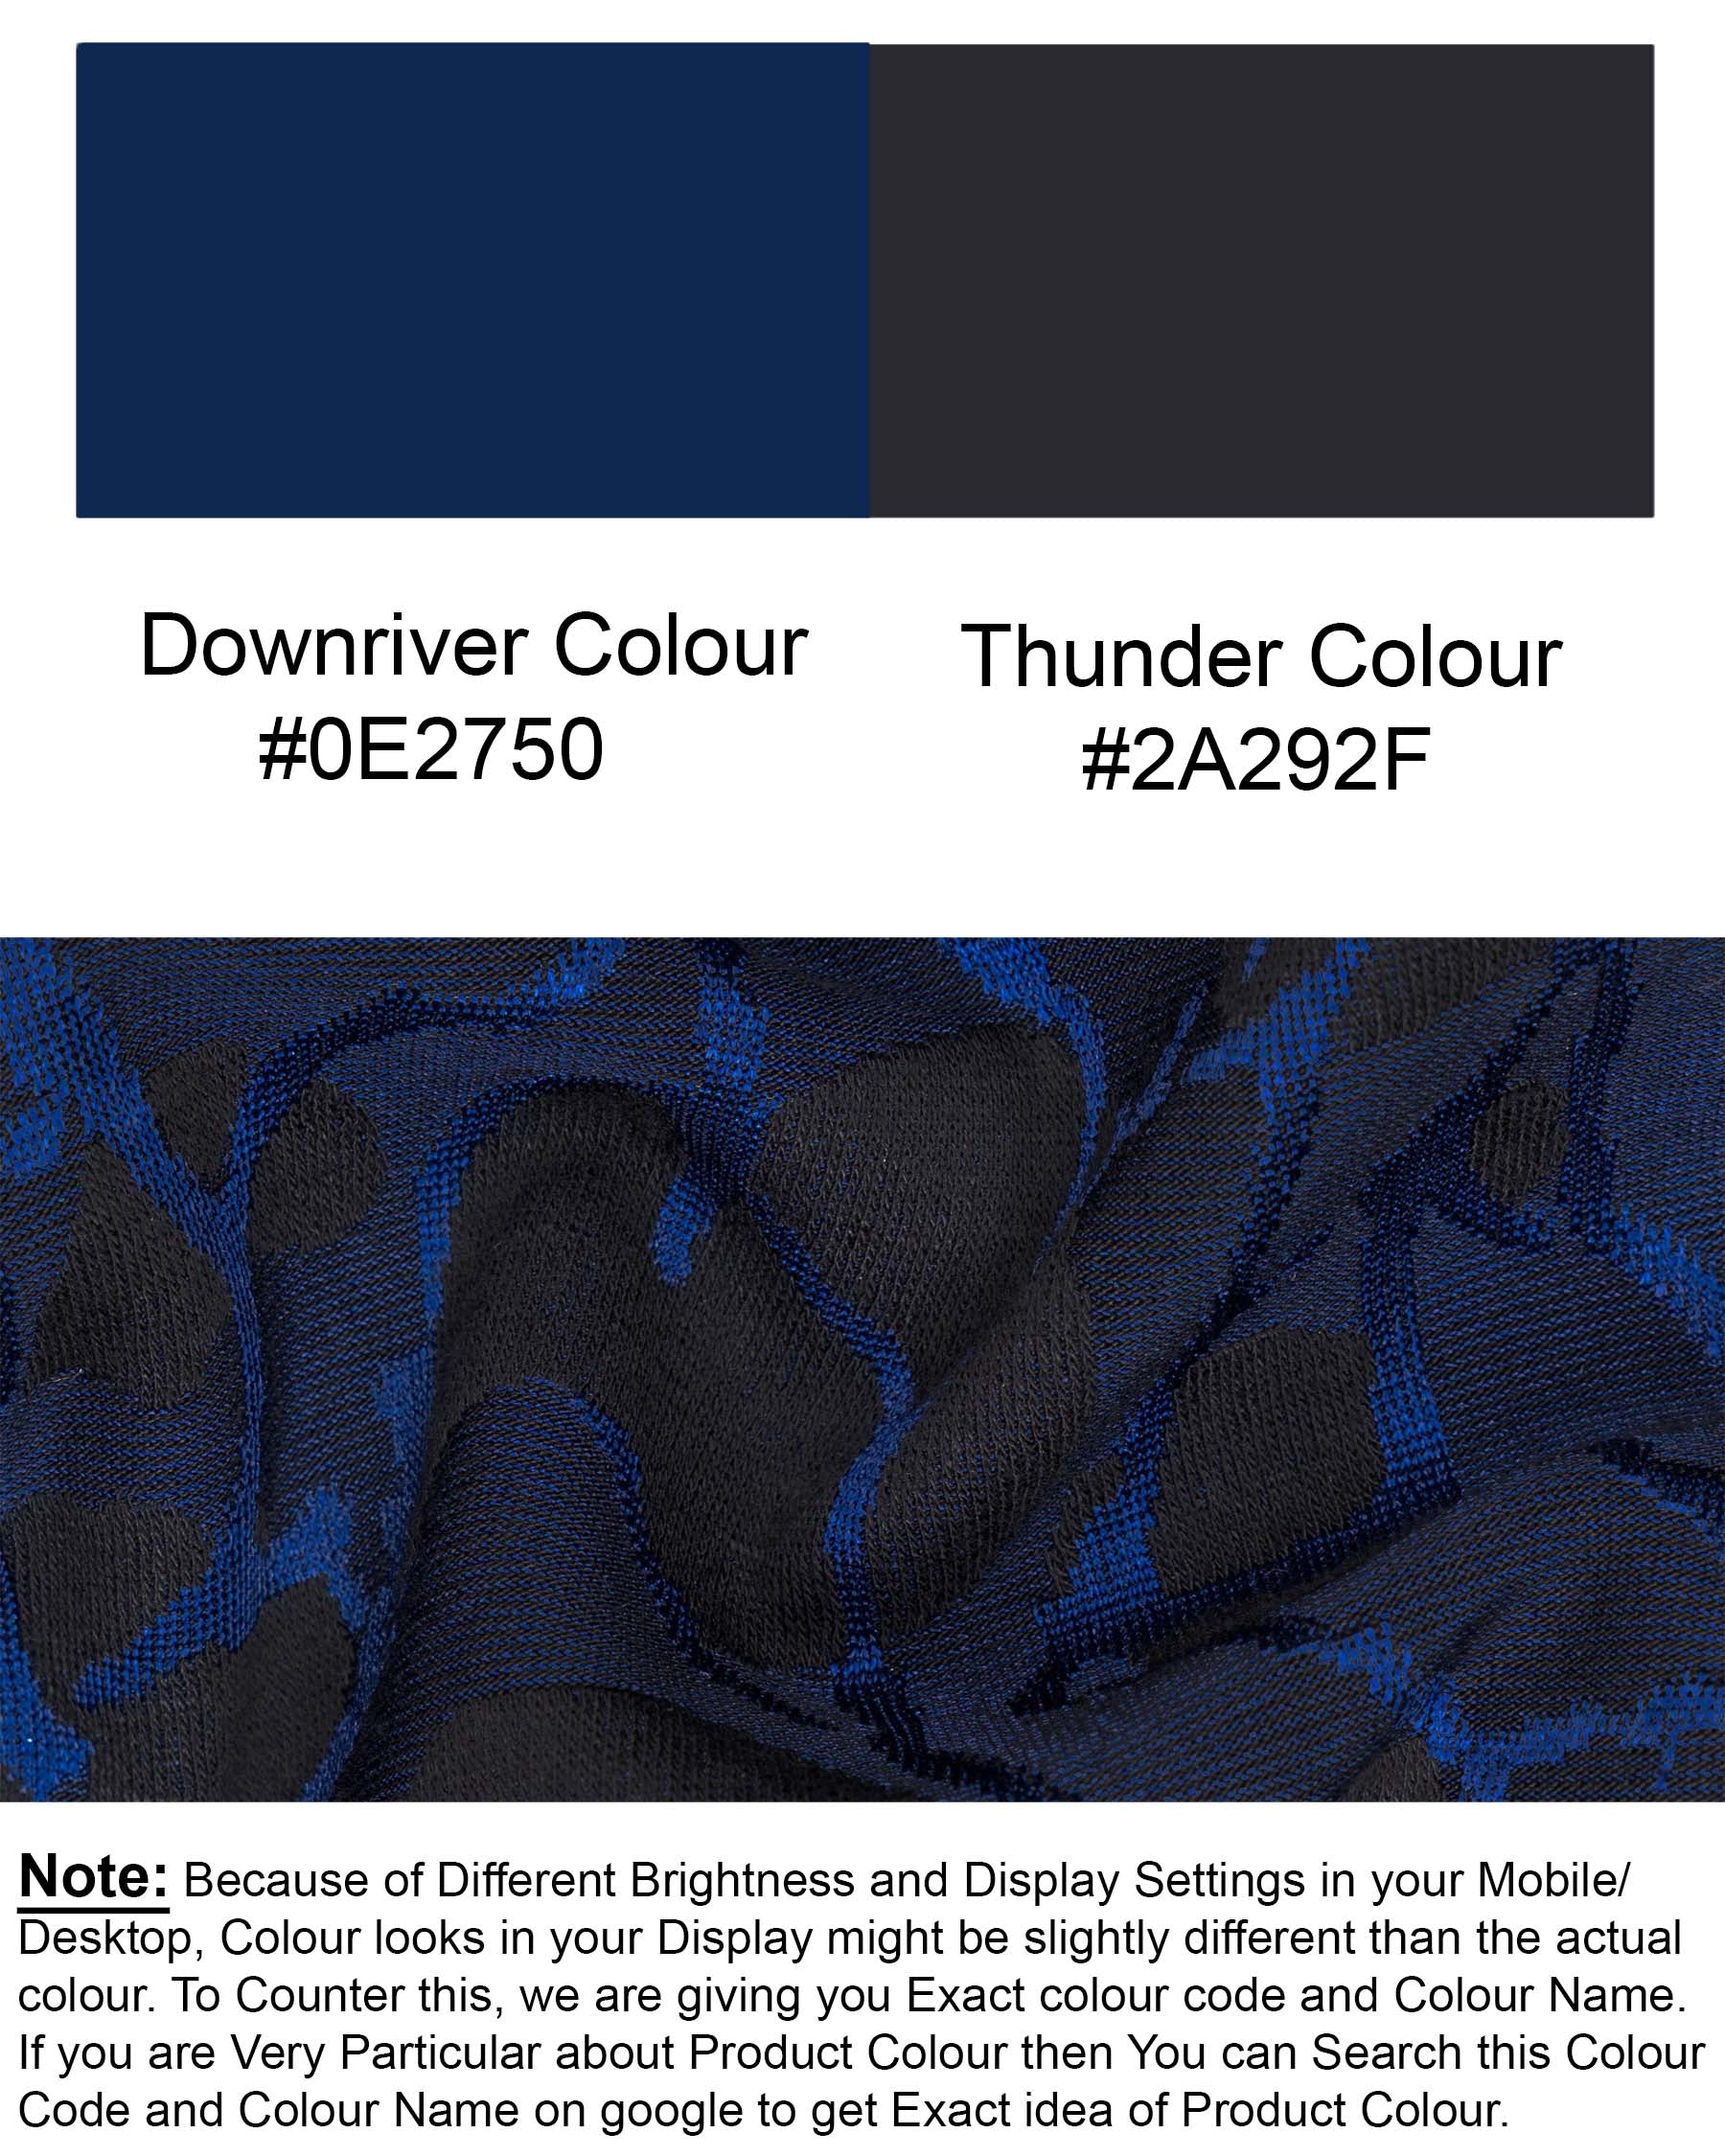 Downriver Blue with Thunder Black Tuxedo Designer Blazer BL1798-BKL-36,BL1798-BKL-38,BL1798-BKL-40,BL1798-BKL-42,BL1798-BKL-44,BL1798-BKL-46,BL1798-BKL-48,BL1798-BKL-50,BL1798-BKL-52,BL1798-BKL-54,BL1798-BKL-56,BL1798-BKL-58,BL1798-BKL-60